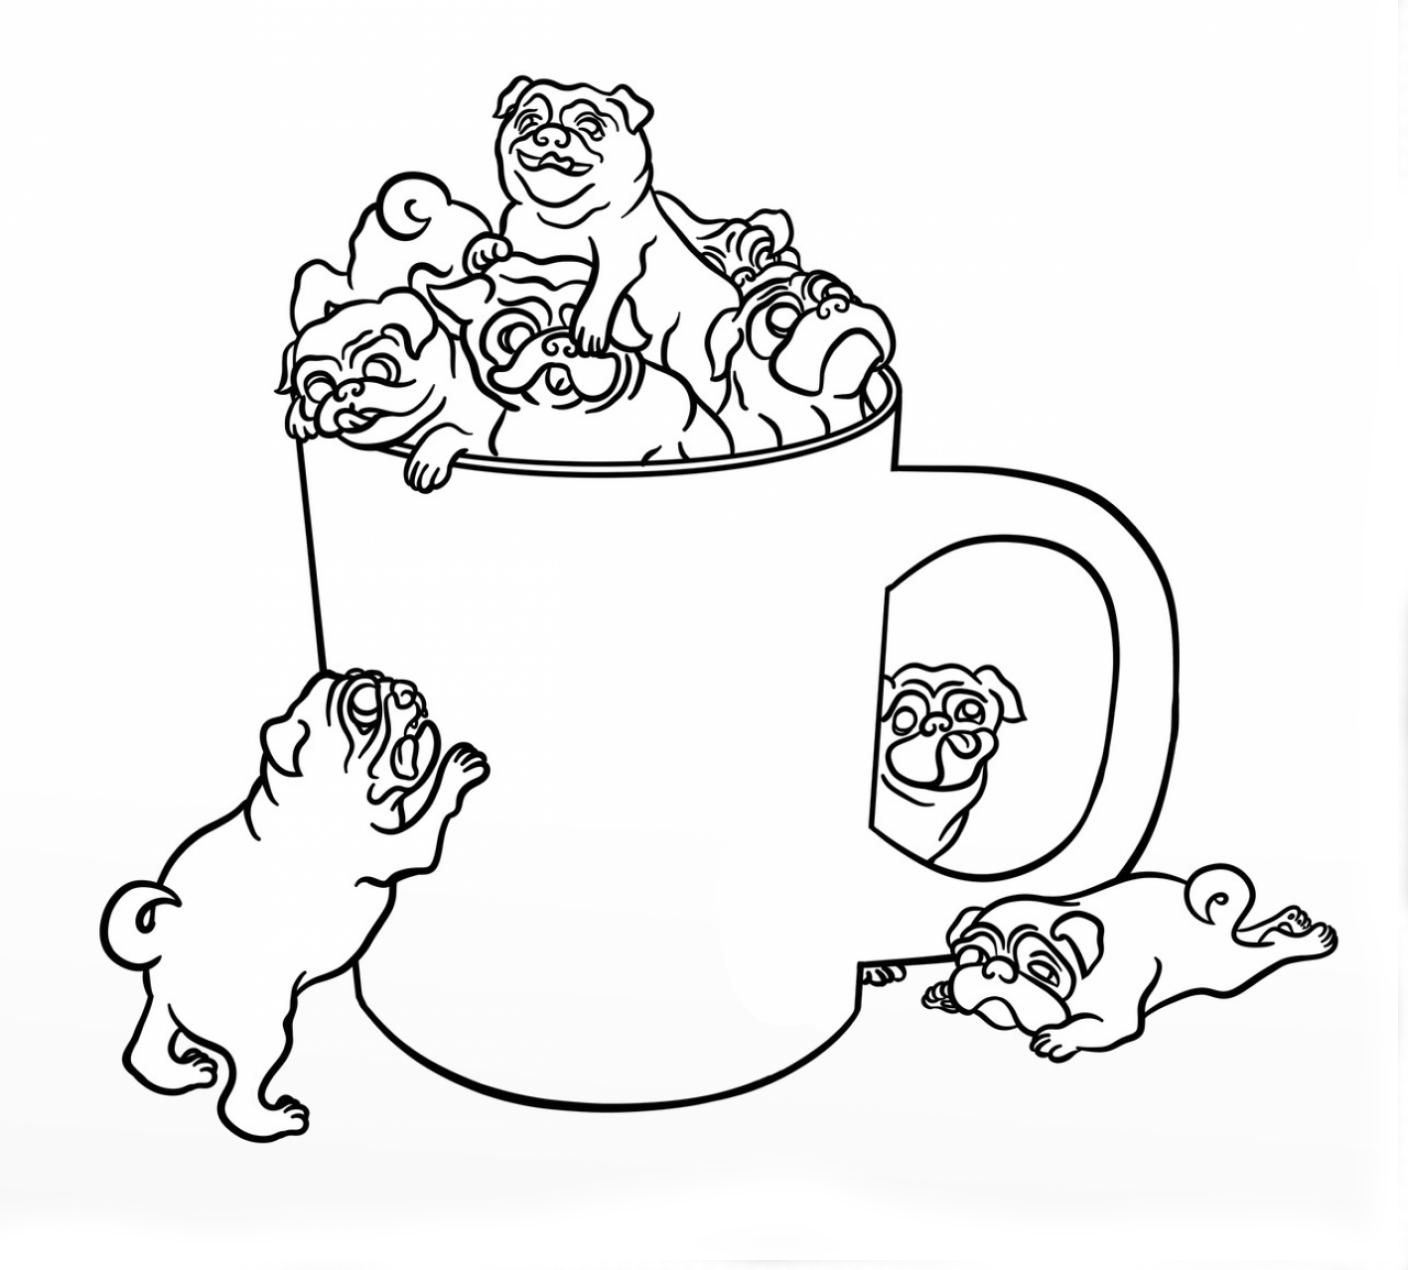 Pugs in a mug